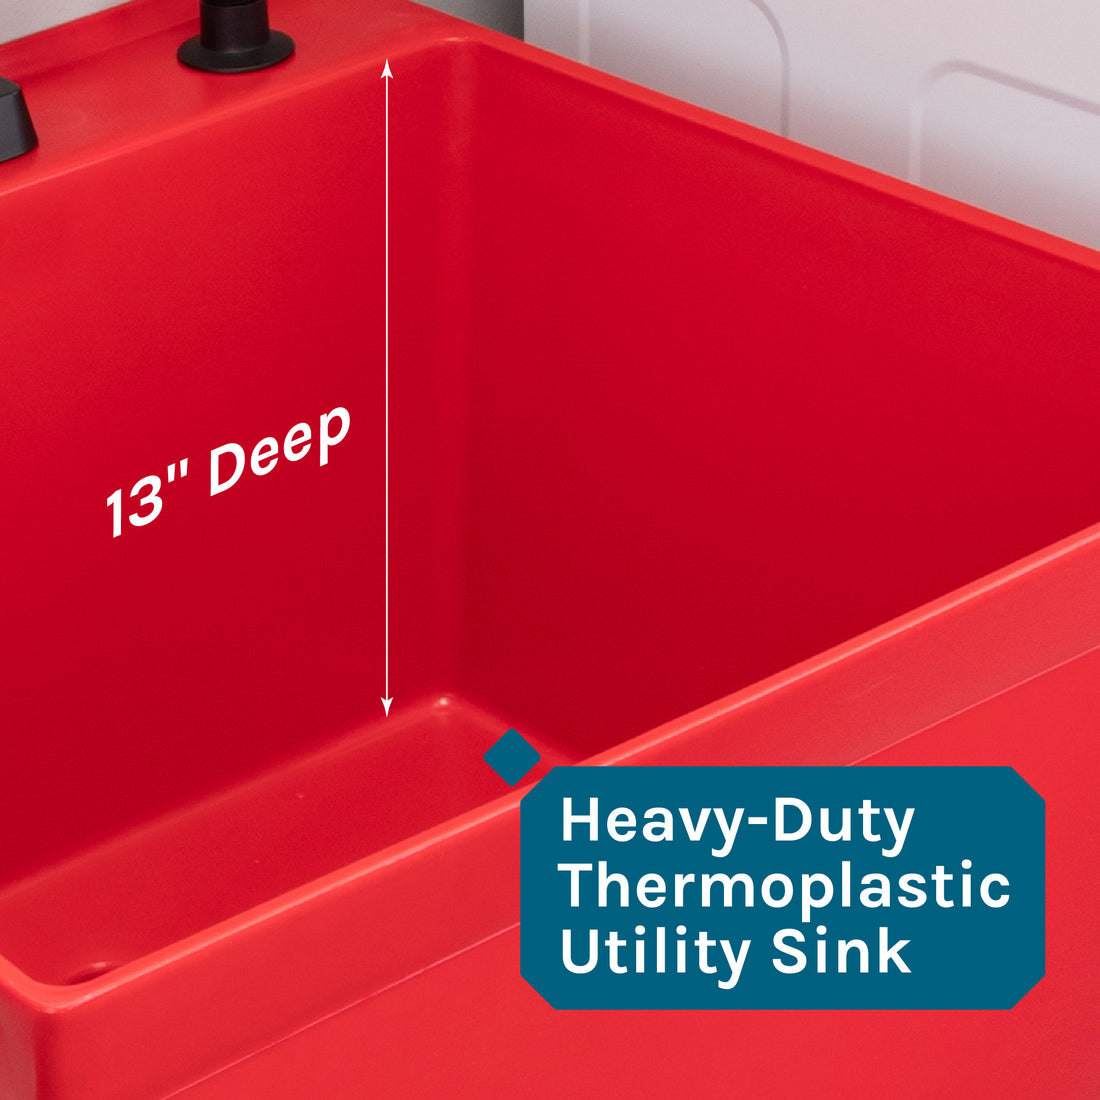 Tehila Standard Freestanding Red Utility Sink with Black Legs and Black Finish Wide-set Gooseneck Faucet with Side Sprayer - Utility sinks vanites Tehila